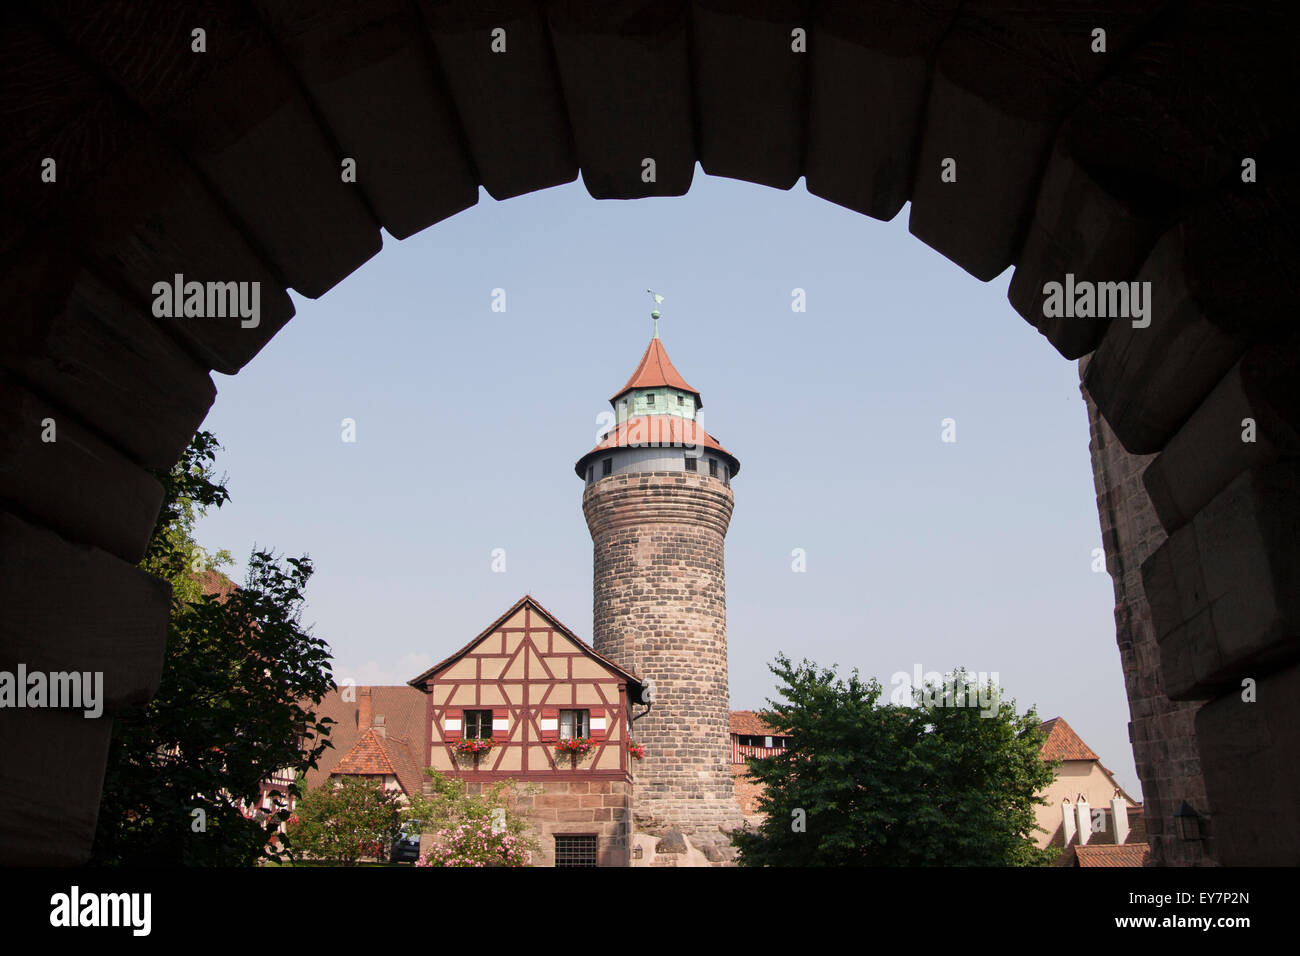 Mittelalterliche Burg Torturm Sinwellturm Nürnberg Stockfoto